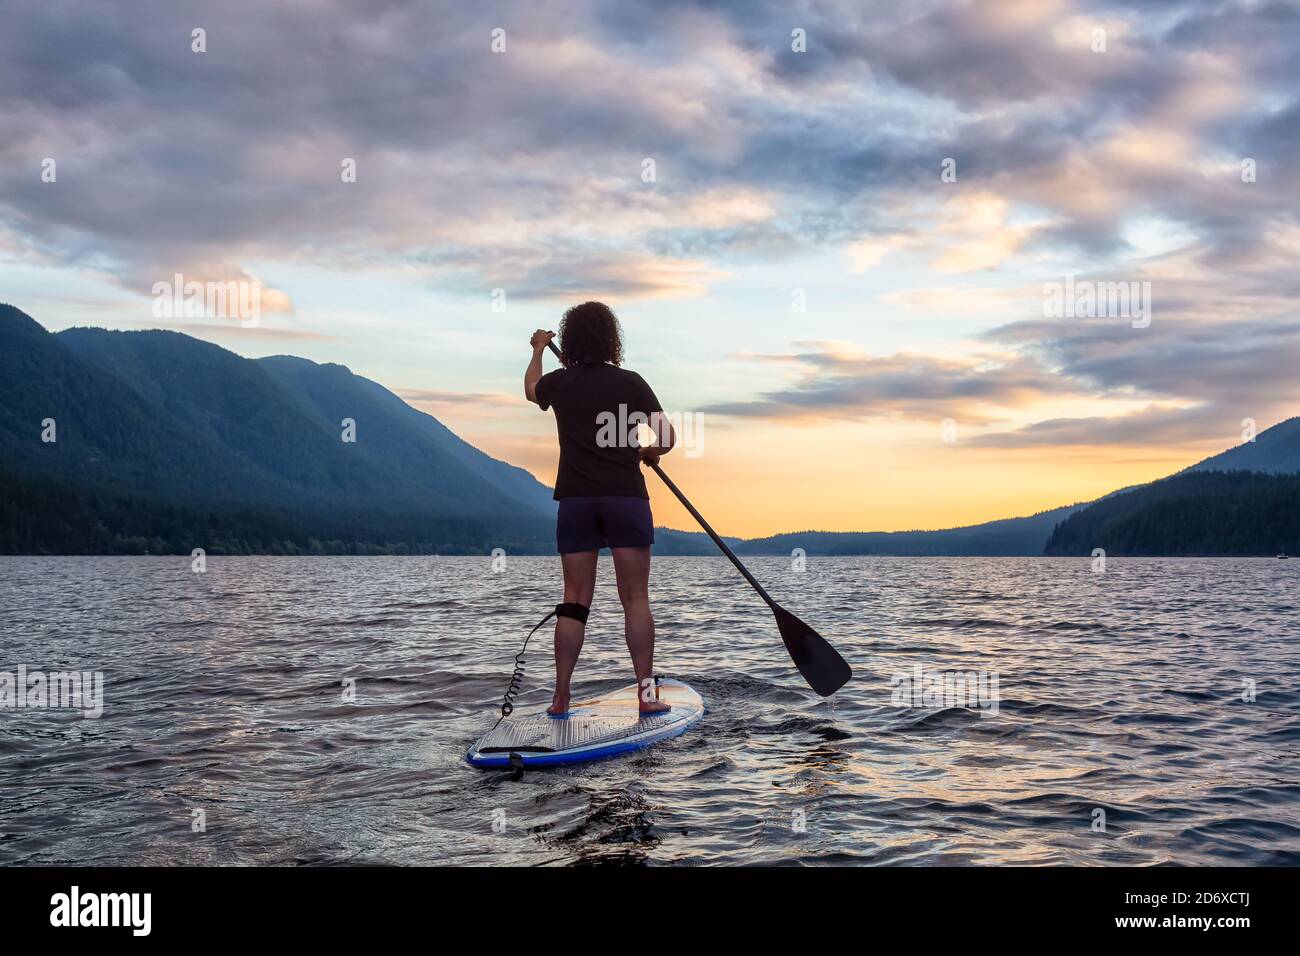 Woman Paddleboarding on Scenic Lake at Sunset Stock Photo